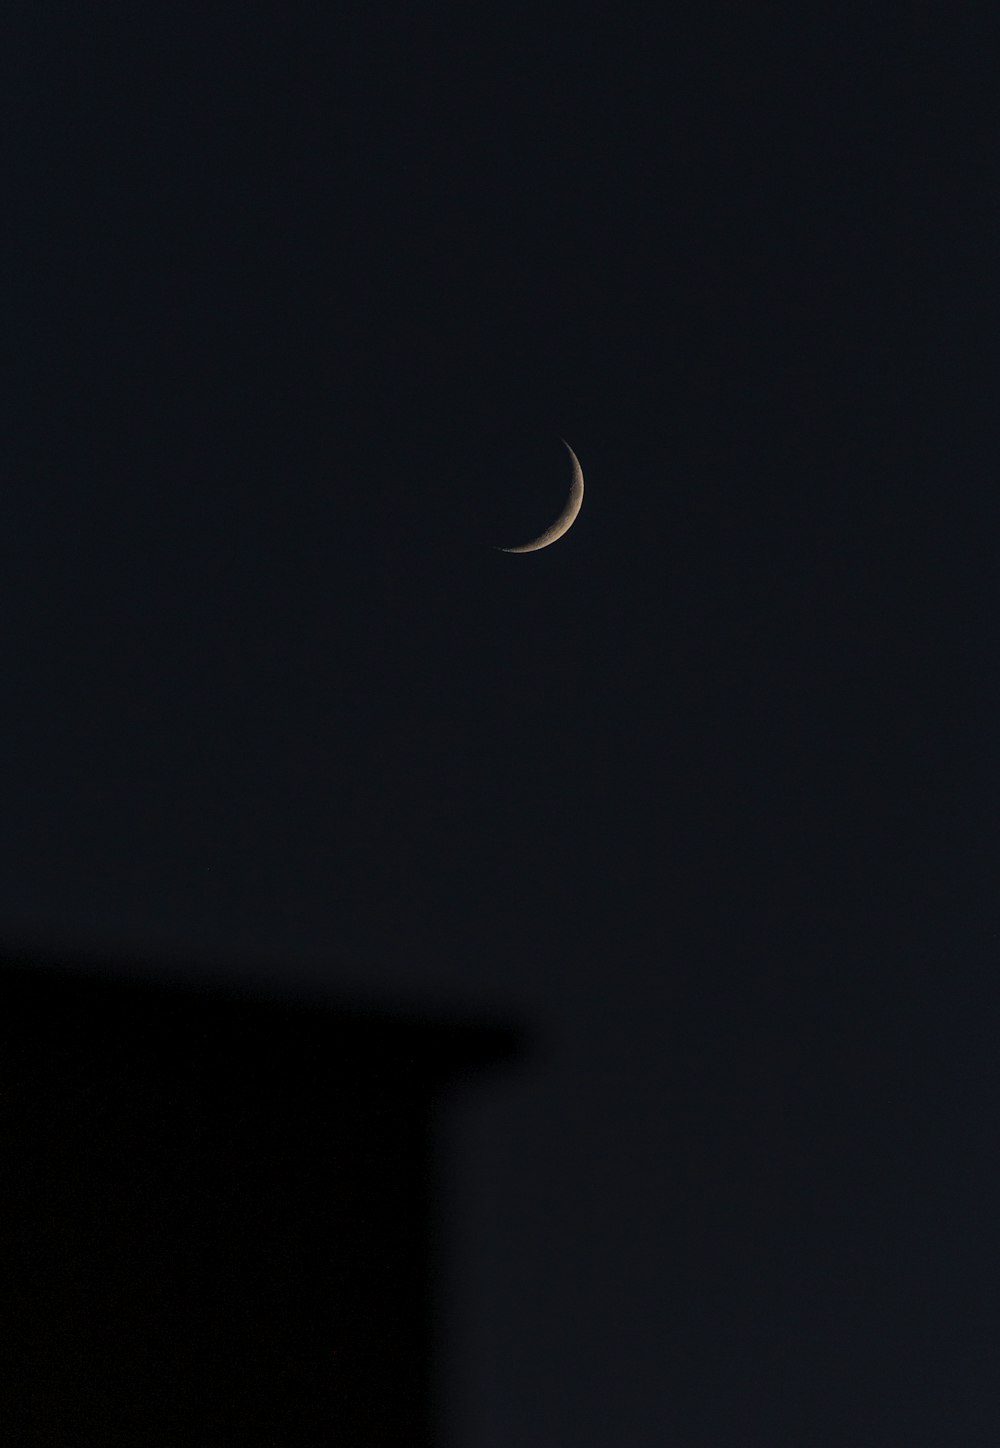 White crescent moon in dark night sky photo – Free Black Image on ...